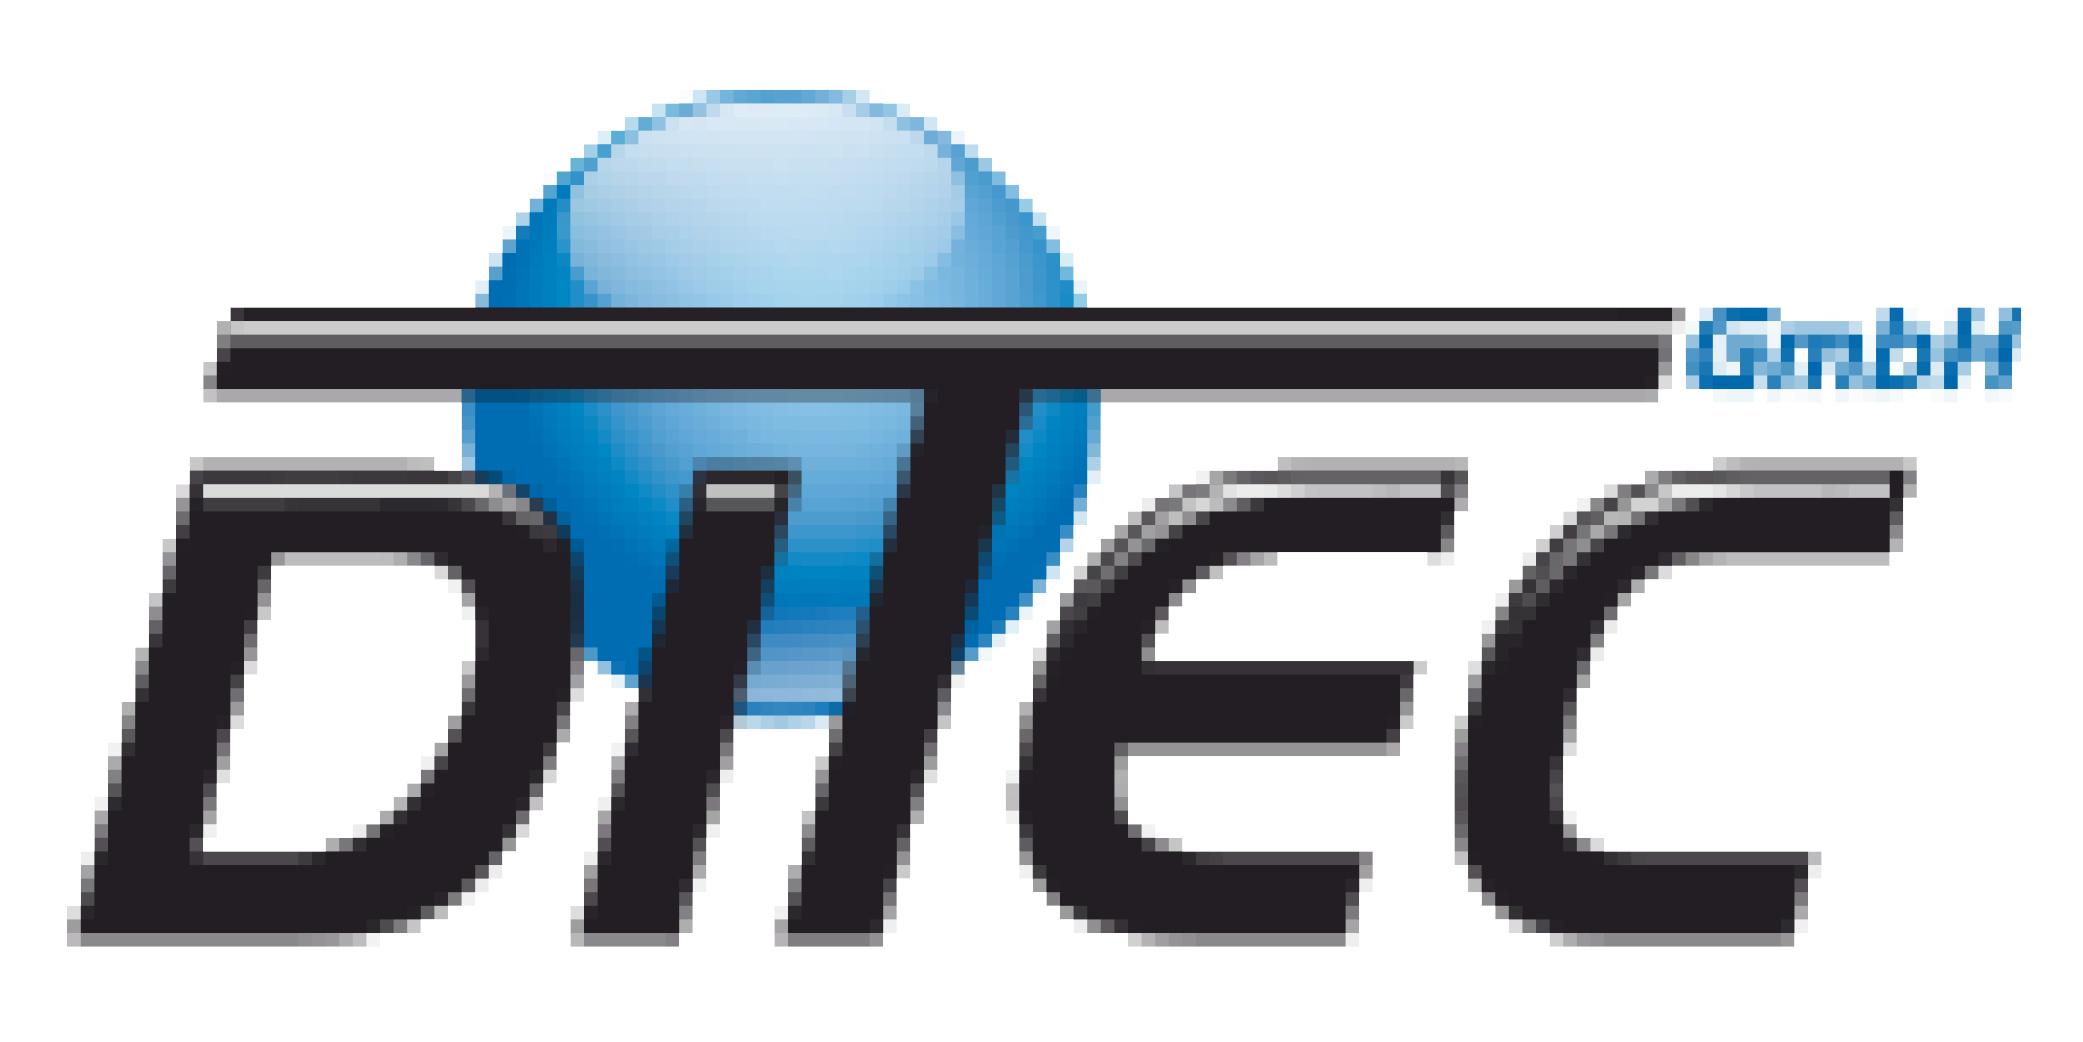 Logo Ditec GmbH